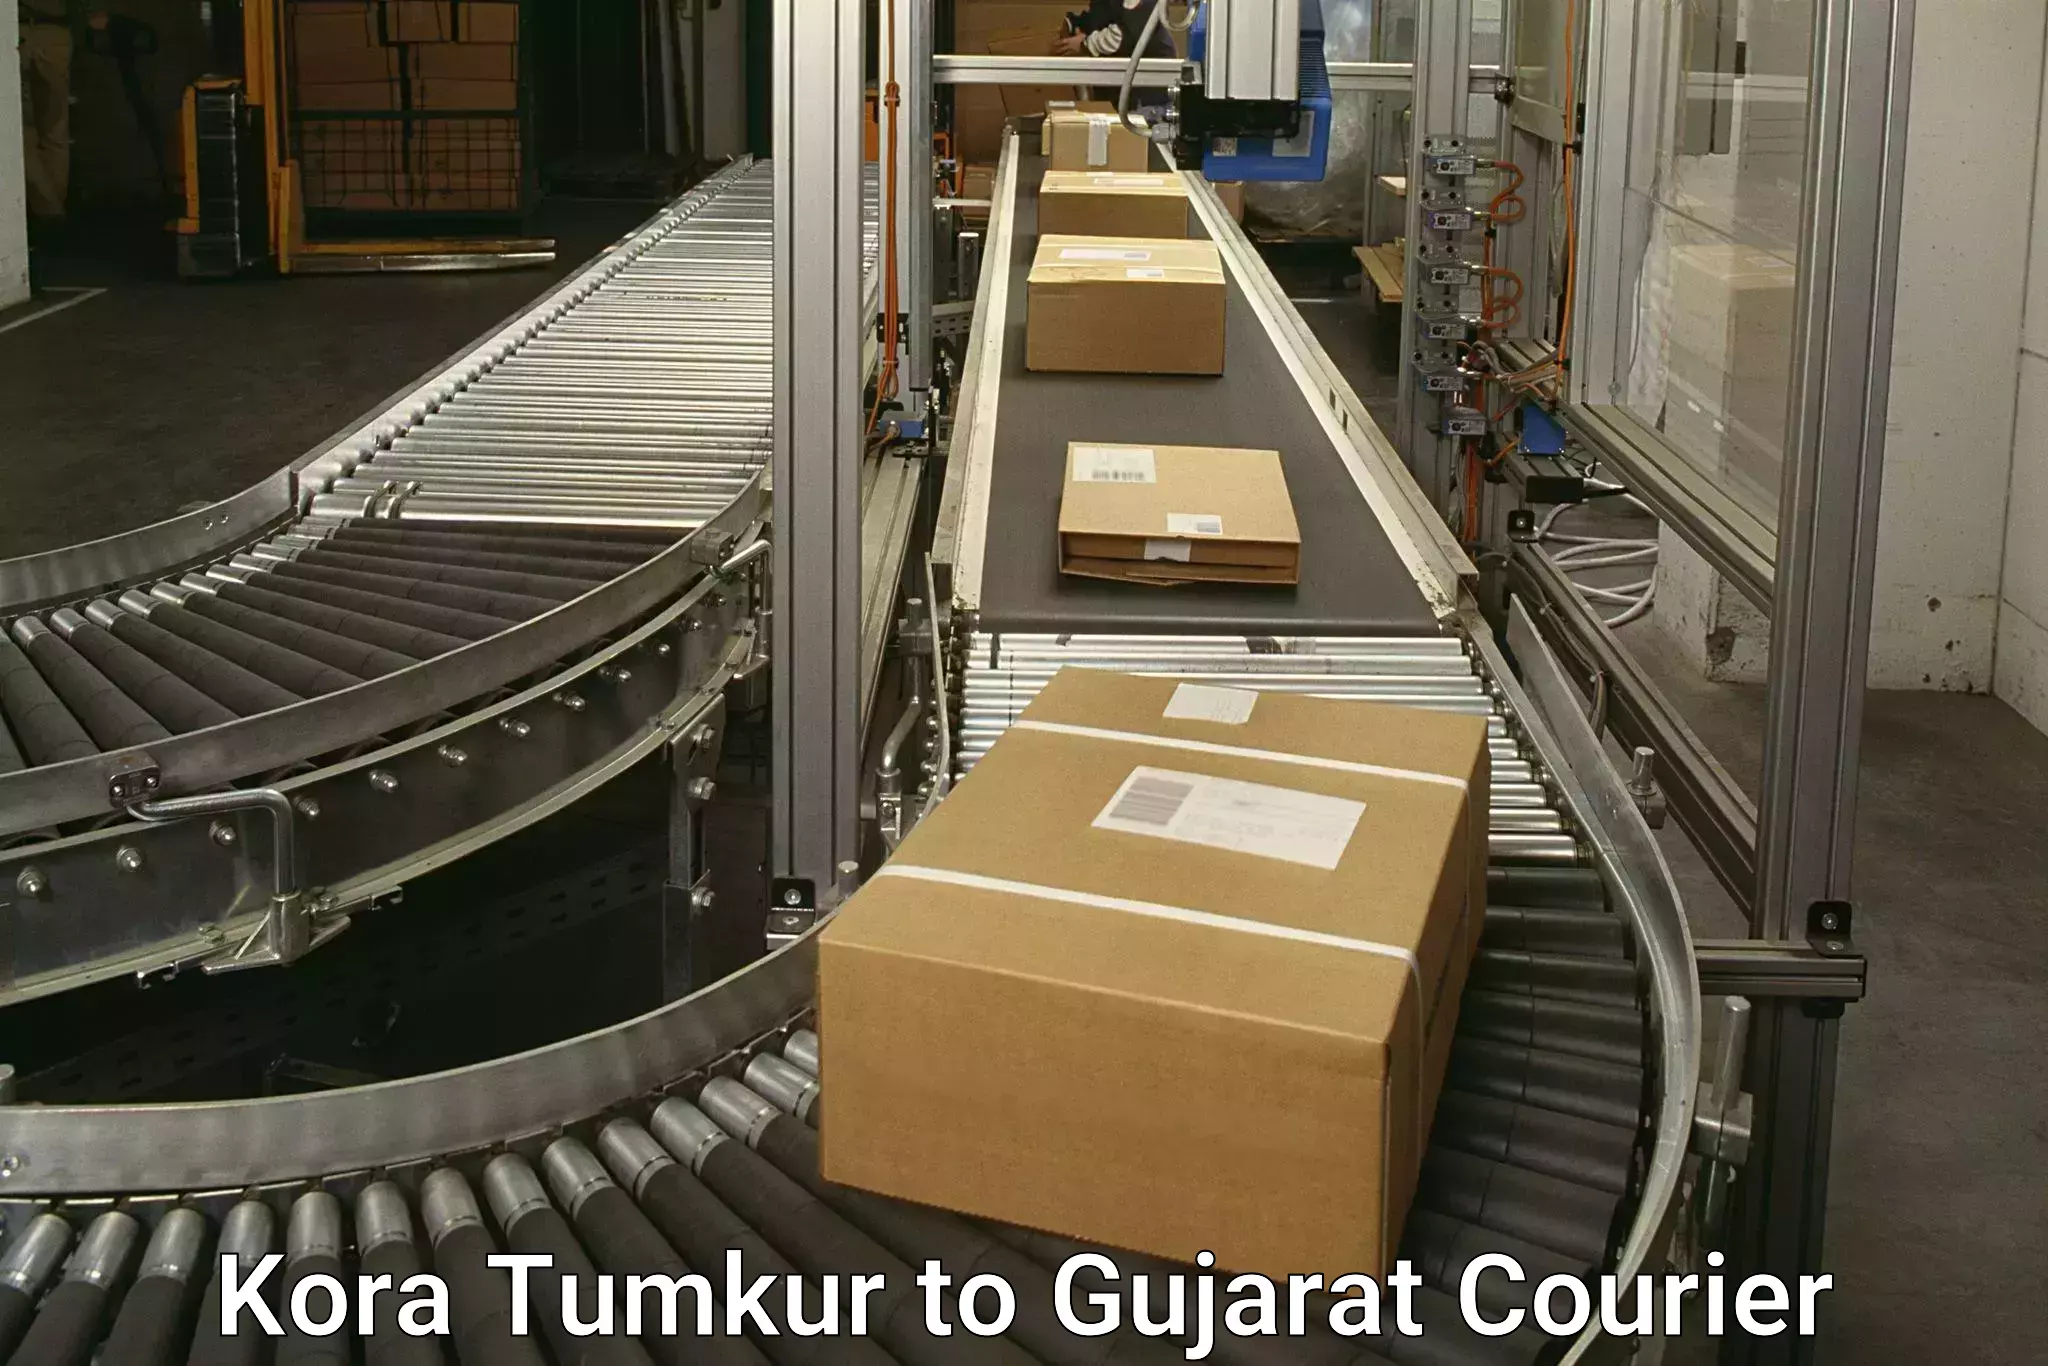 Courier service booking Kora Tumkur to Kandla Port